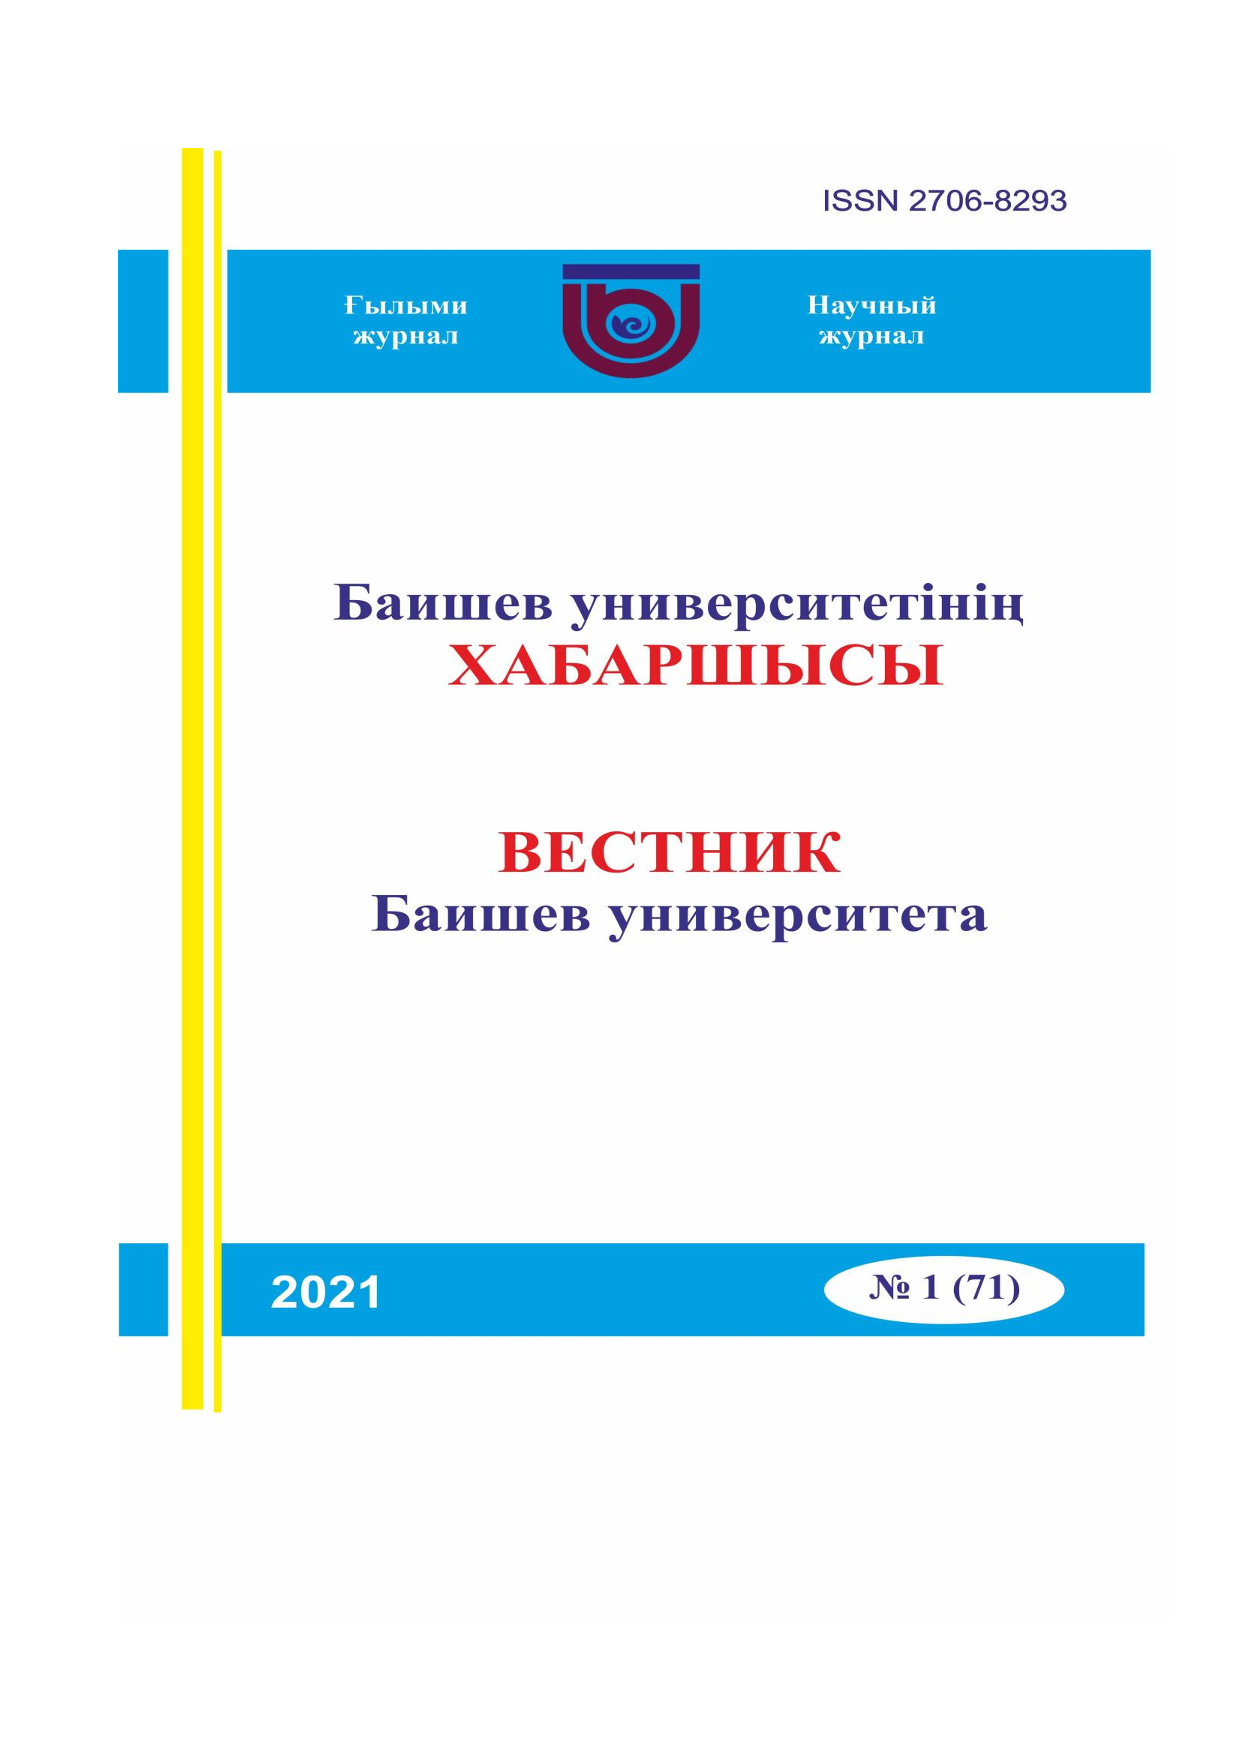 Вестник Баишев Университета №1(71) 2021г